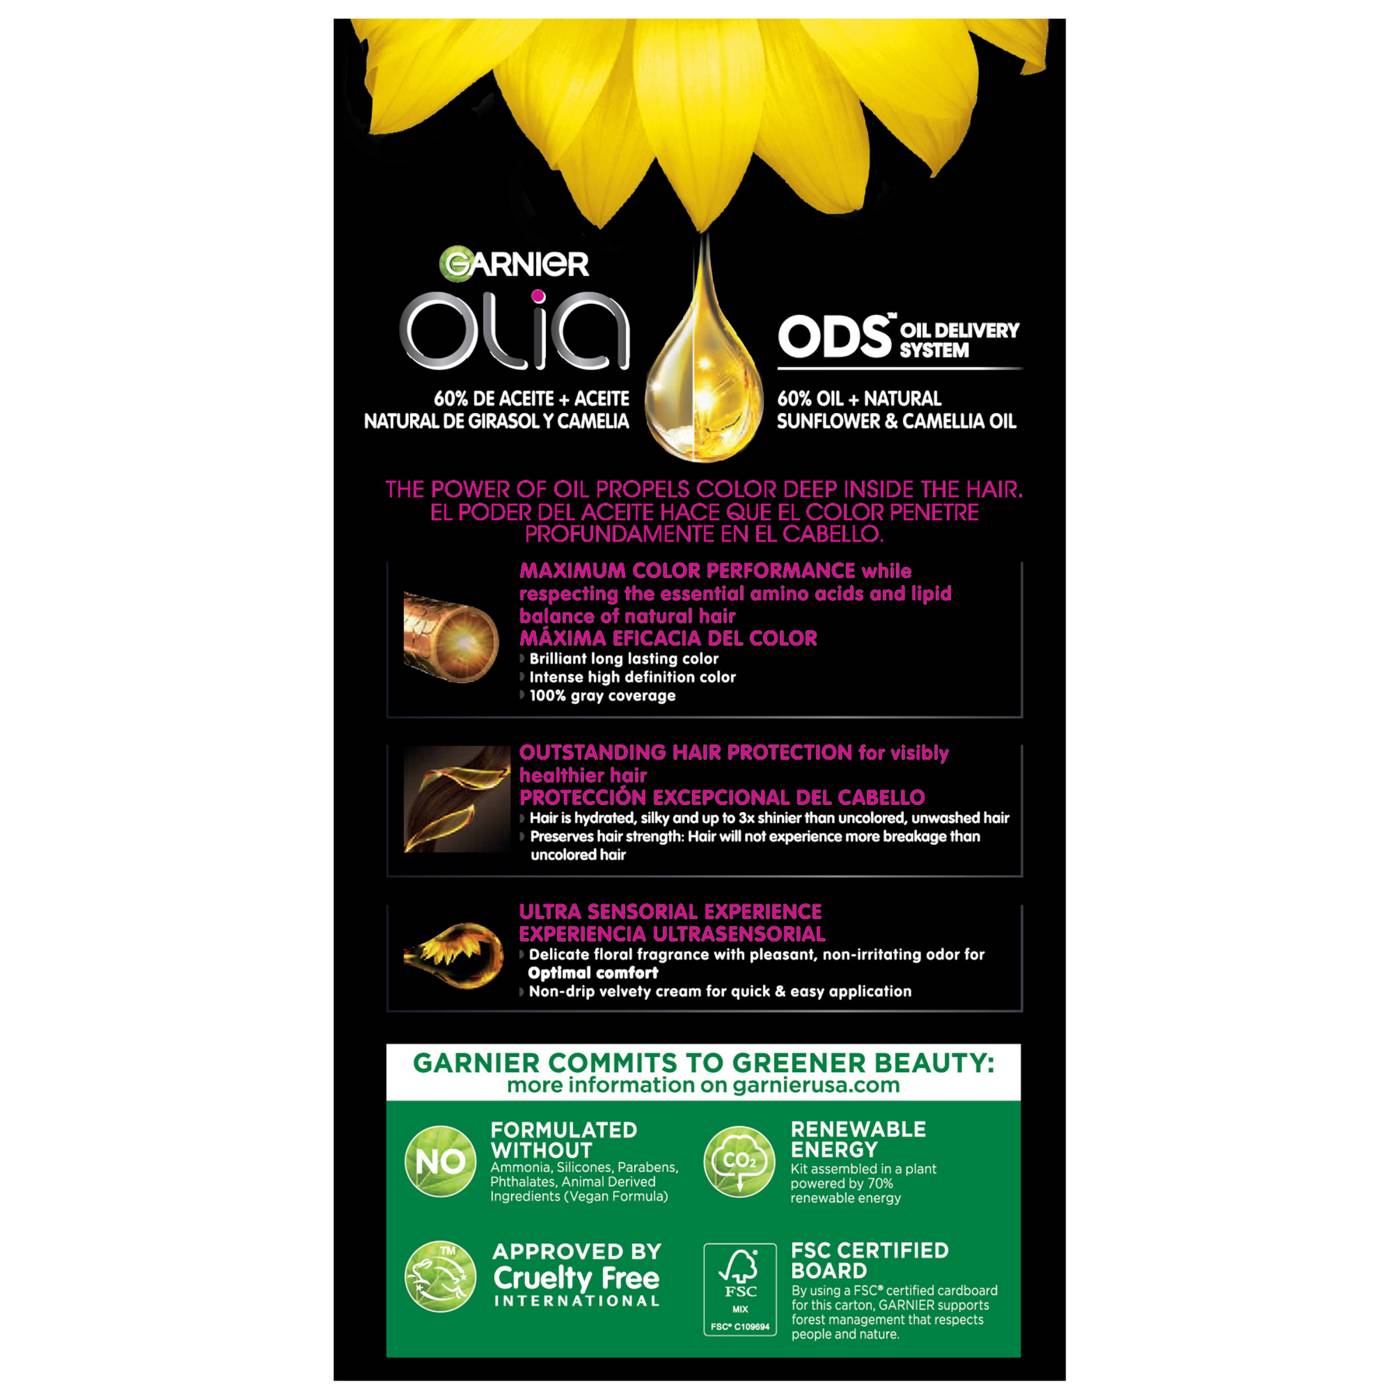 Garnier Olia Oil Powered Ammonia Free Permanent Hair Color 6 1/2.3 Lightest Golden Brown; image 11 of 12